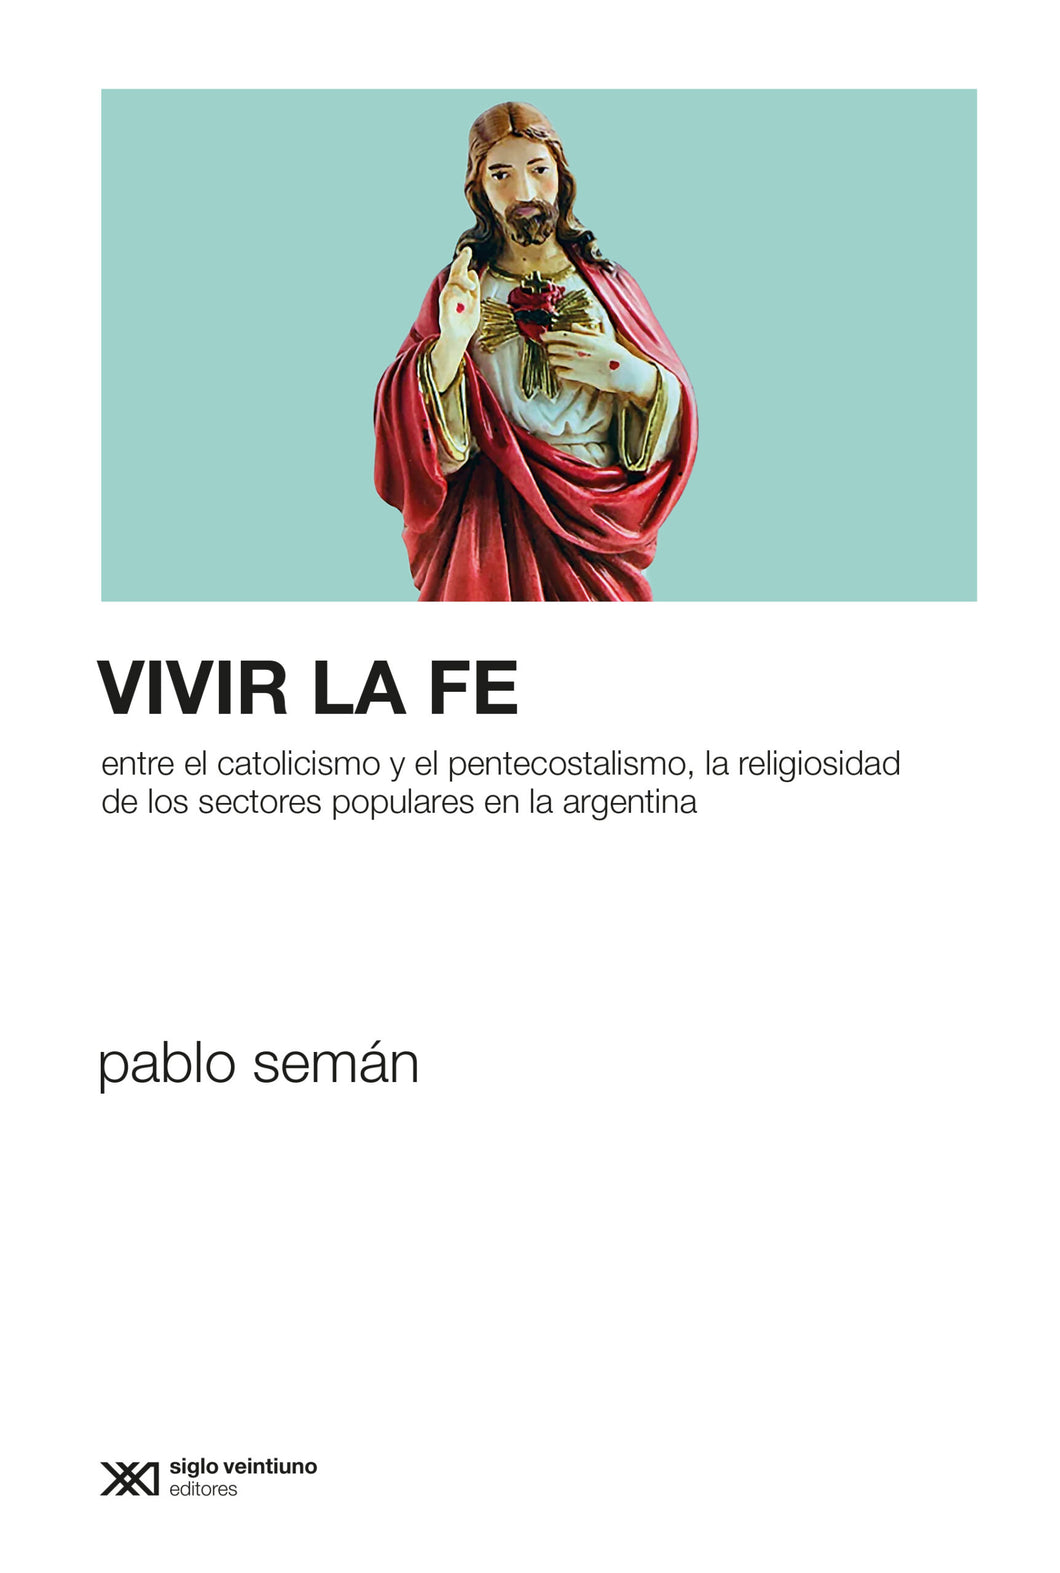 VIVIR LA FE - Pablo Semán